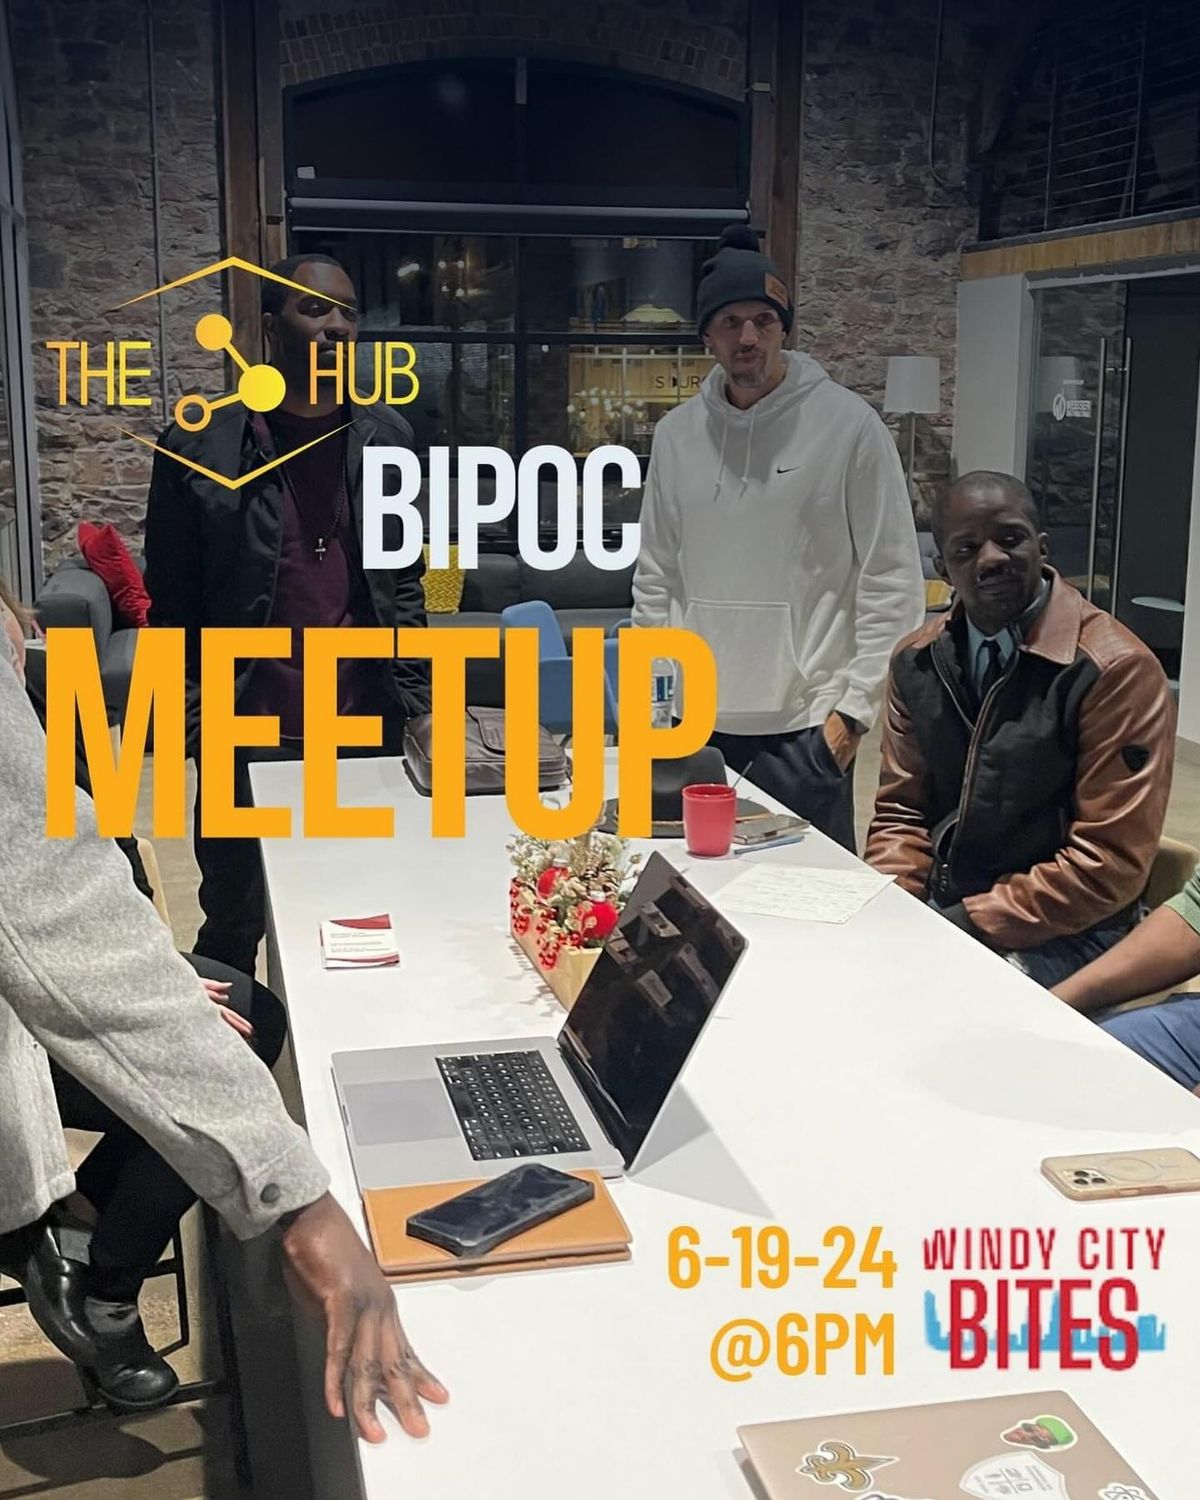 THE HUB BIPOC MEETUP